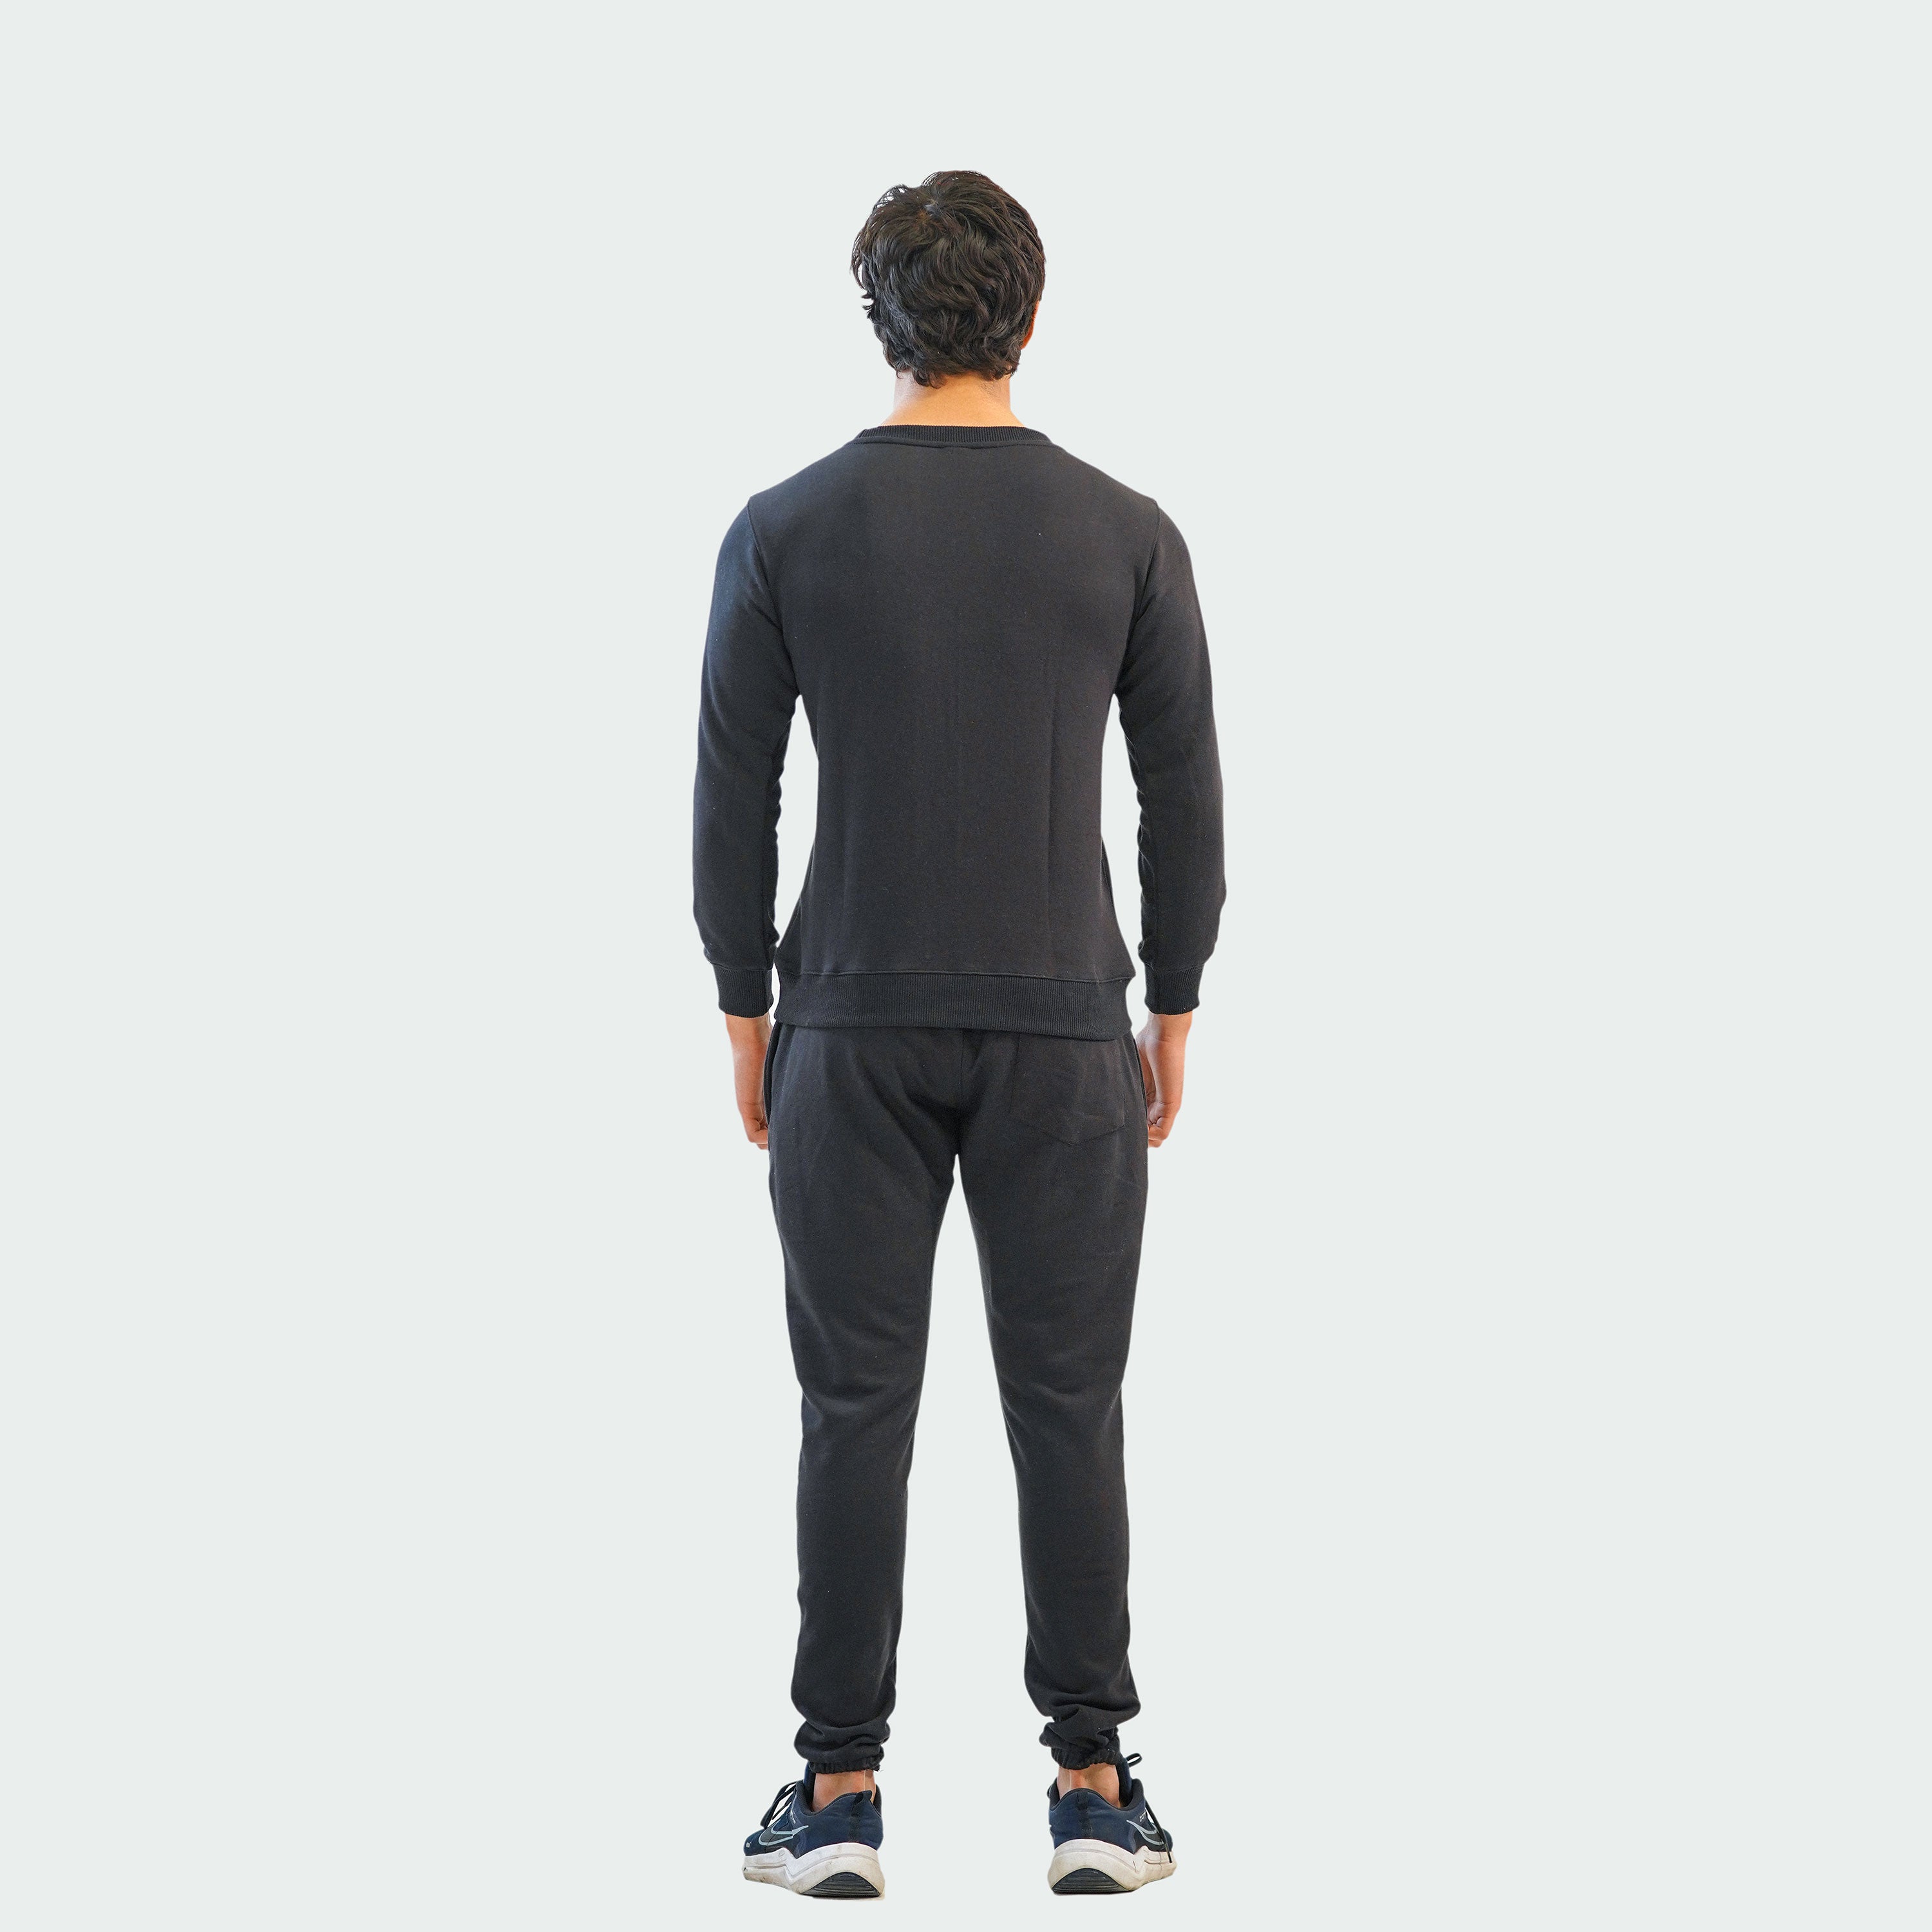 Unisex Athletic Wear - Black